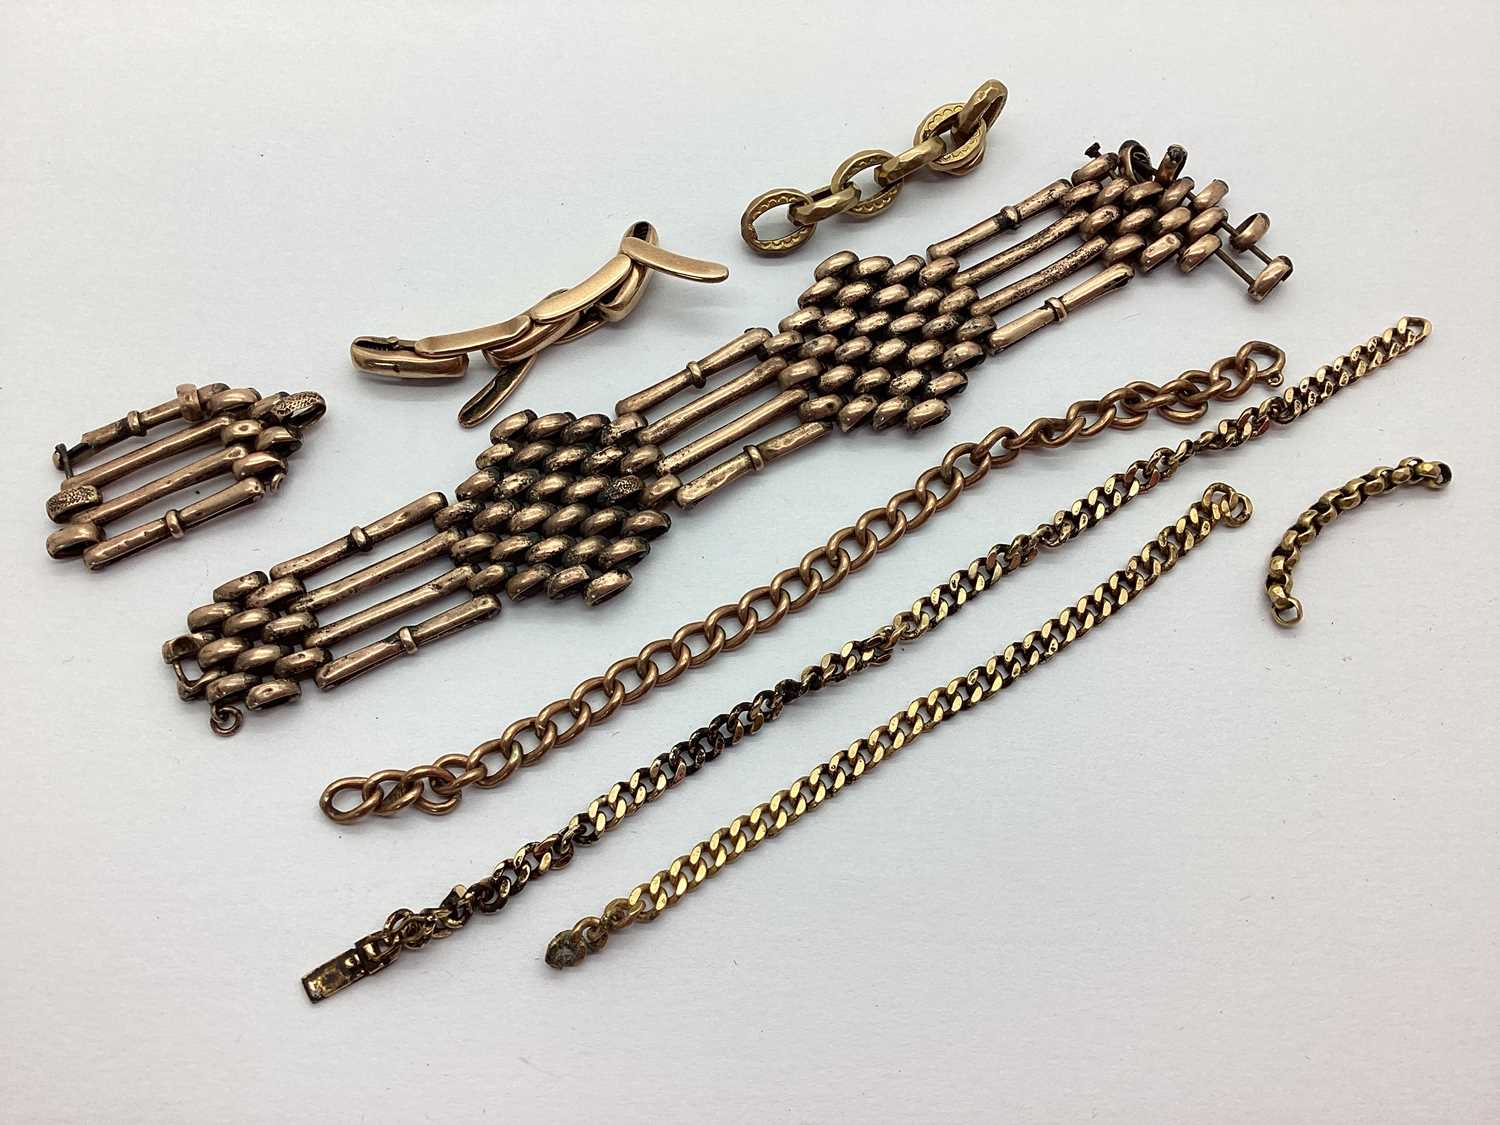 Scrap Jewellery - Wide Part Bracelet, together with expanding bracelet links stamped "9ct"; etc.